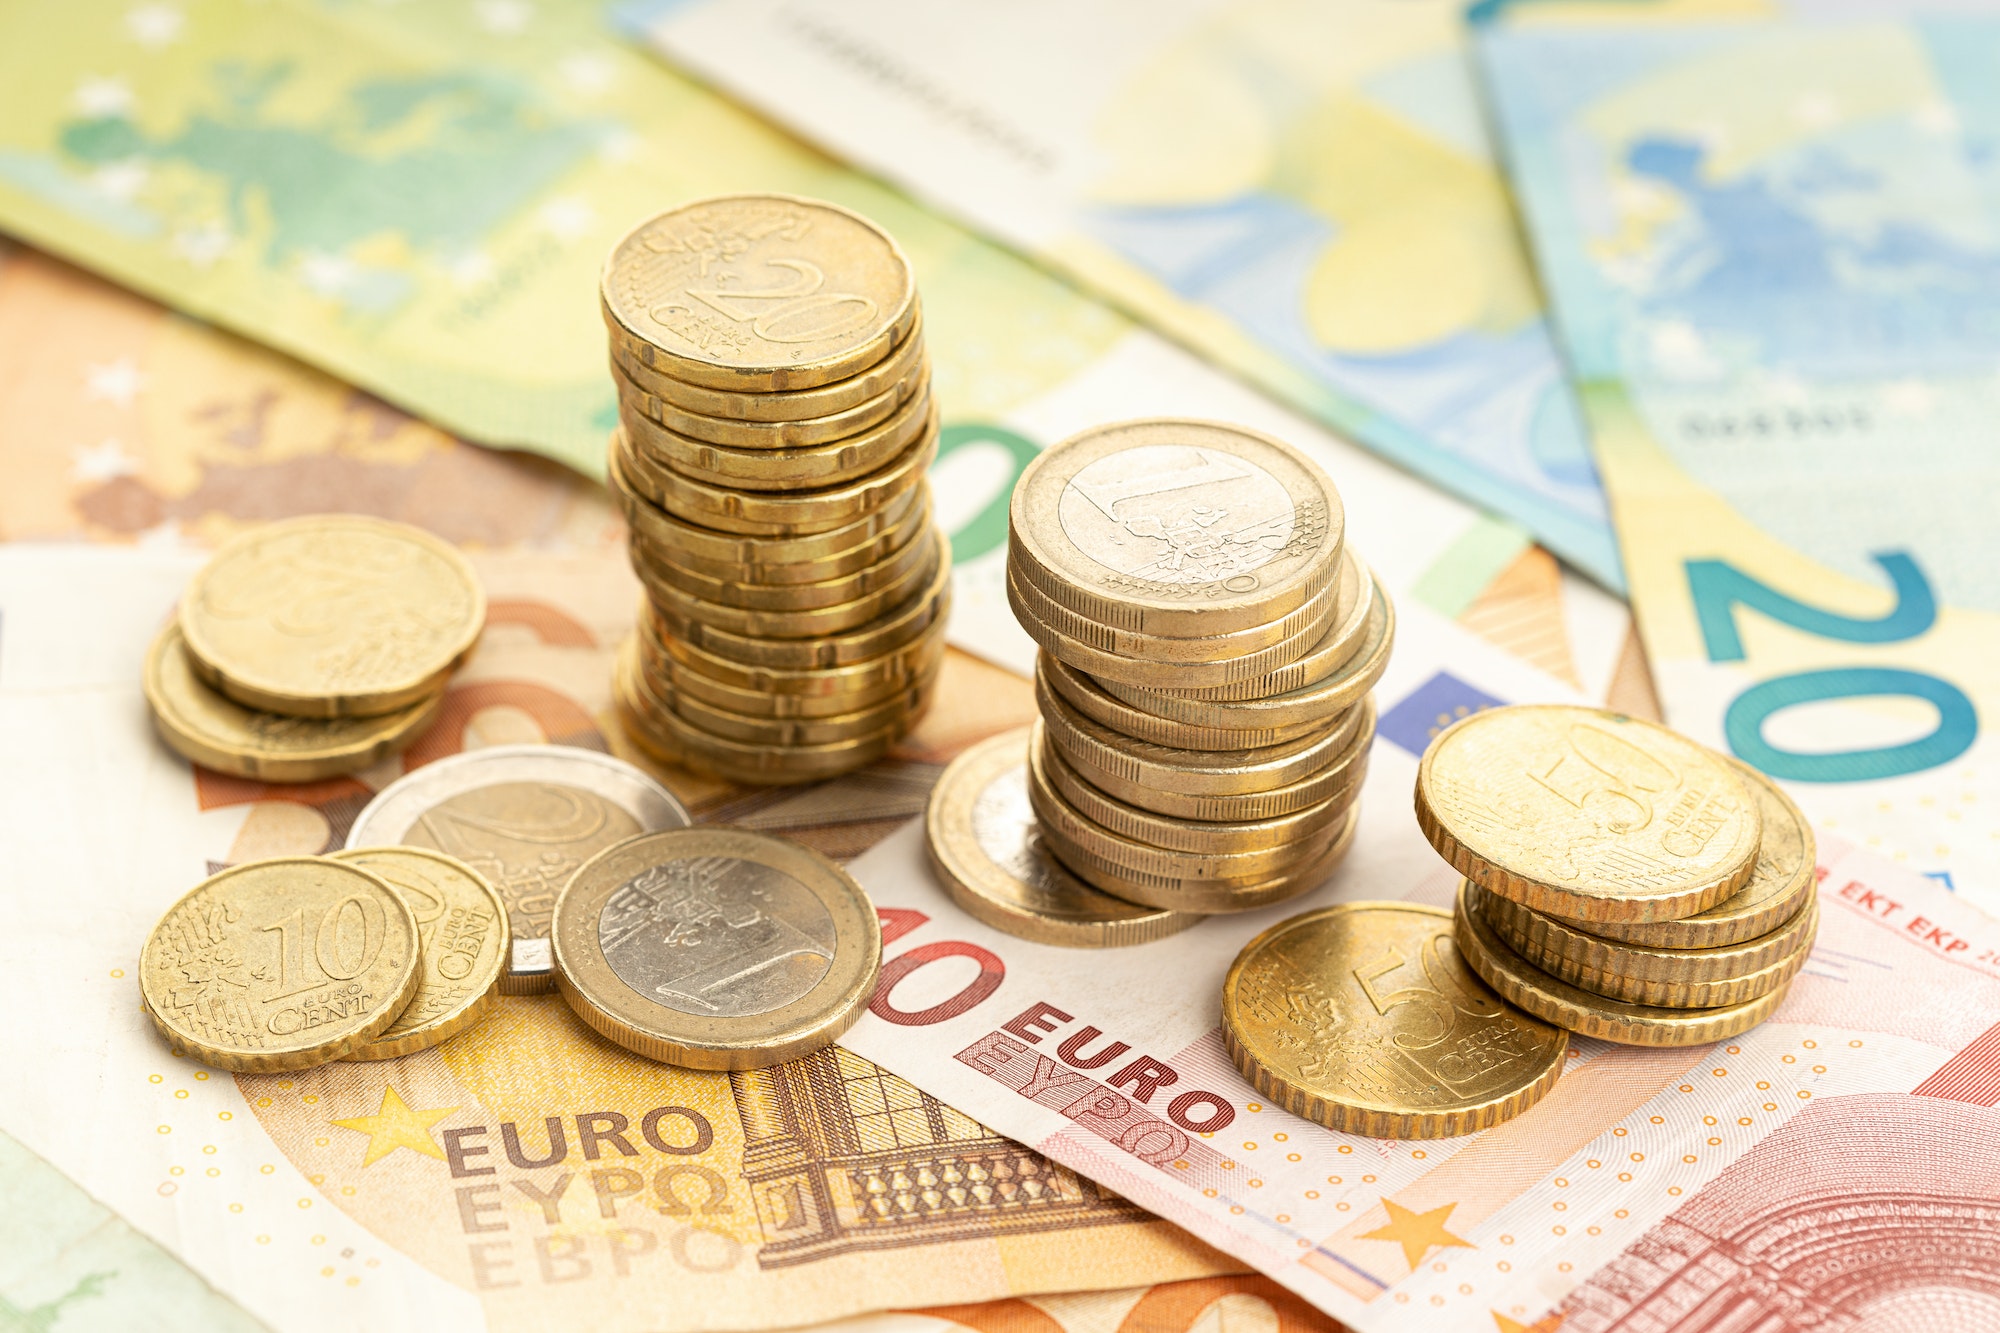 Euro coins and Bank notes